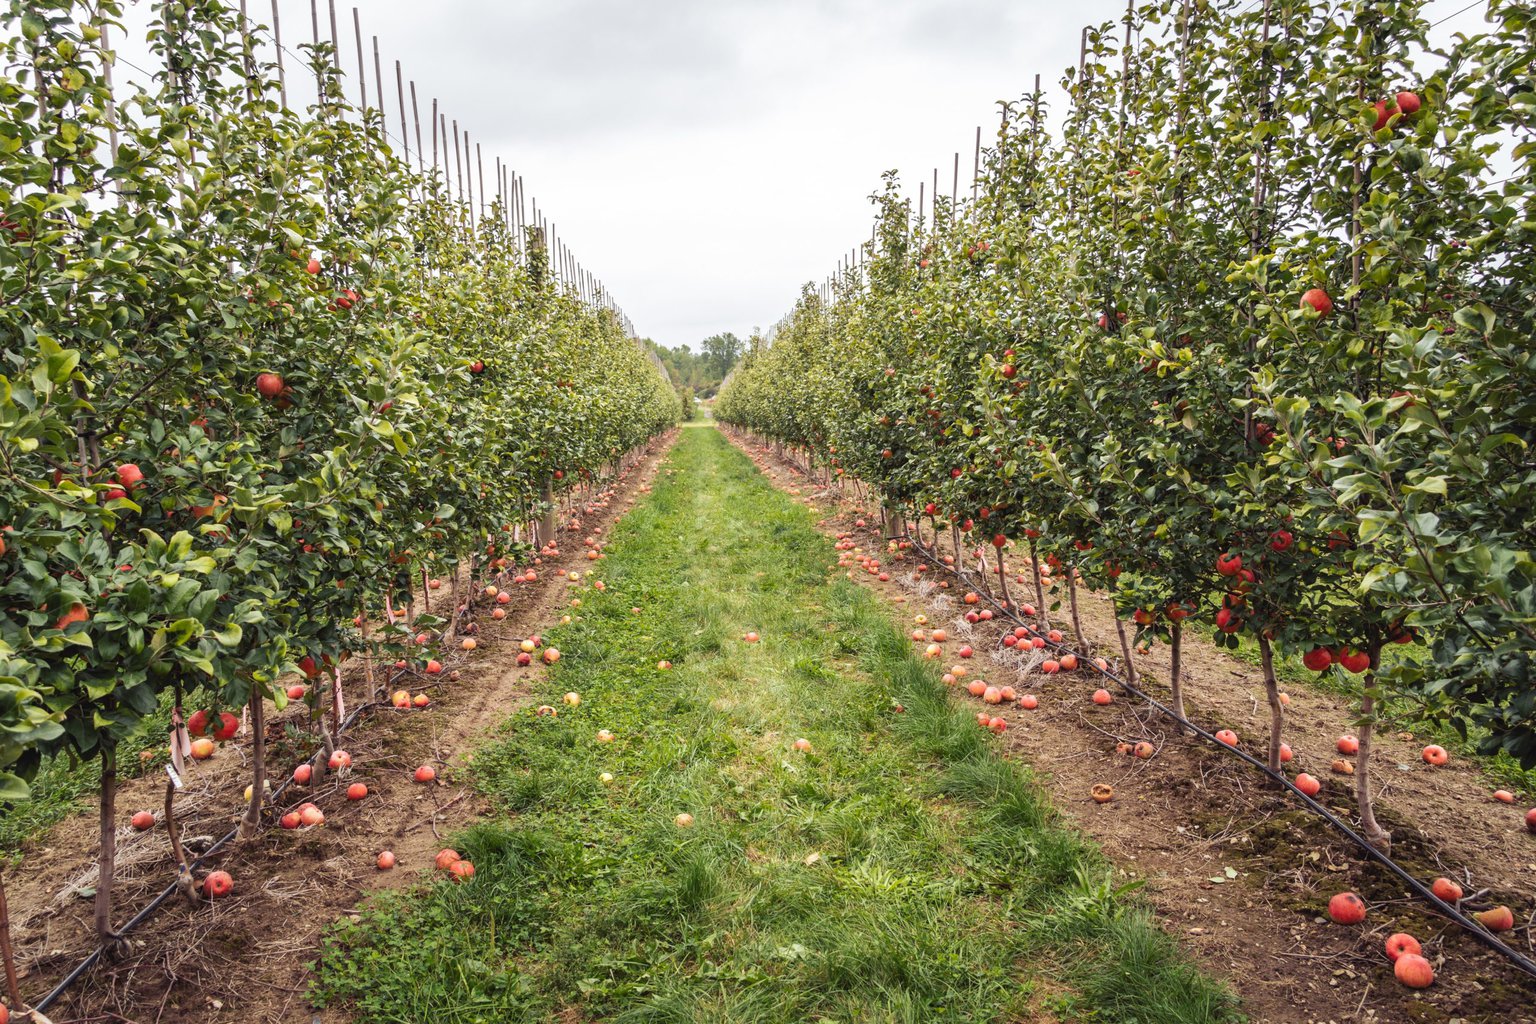 Apple orchard photo from unsplash